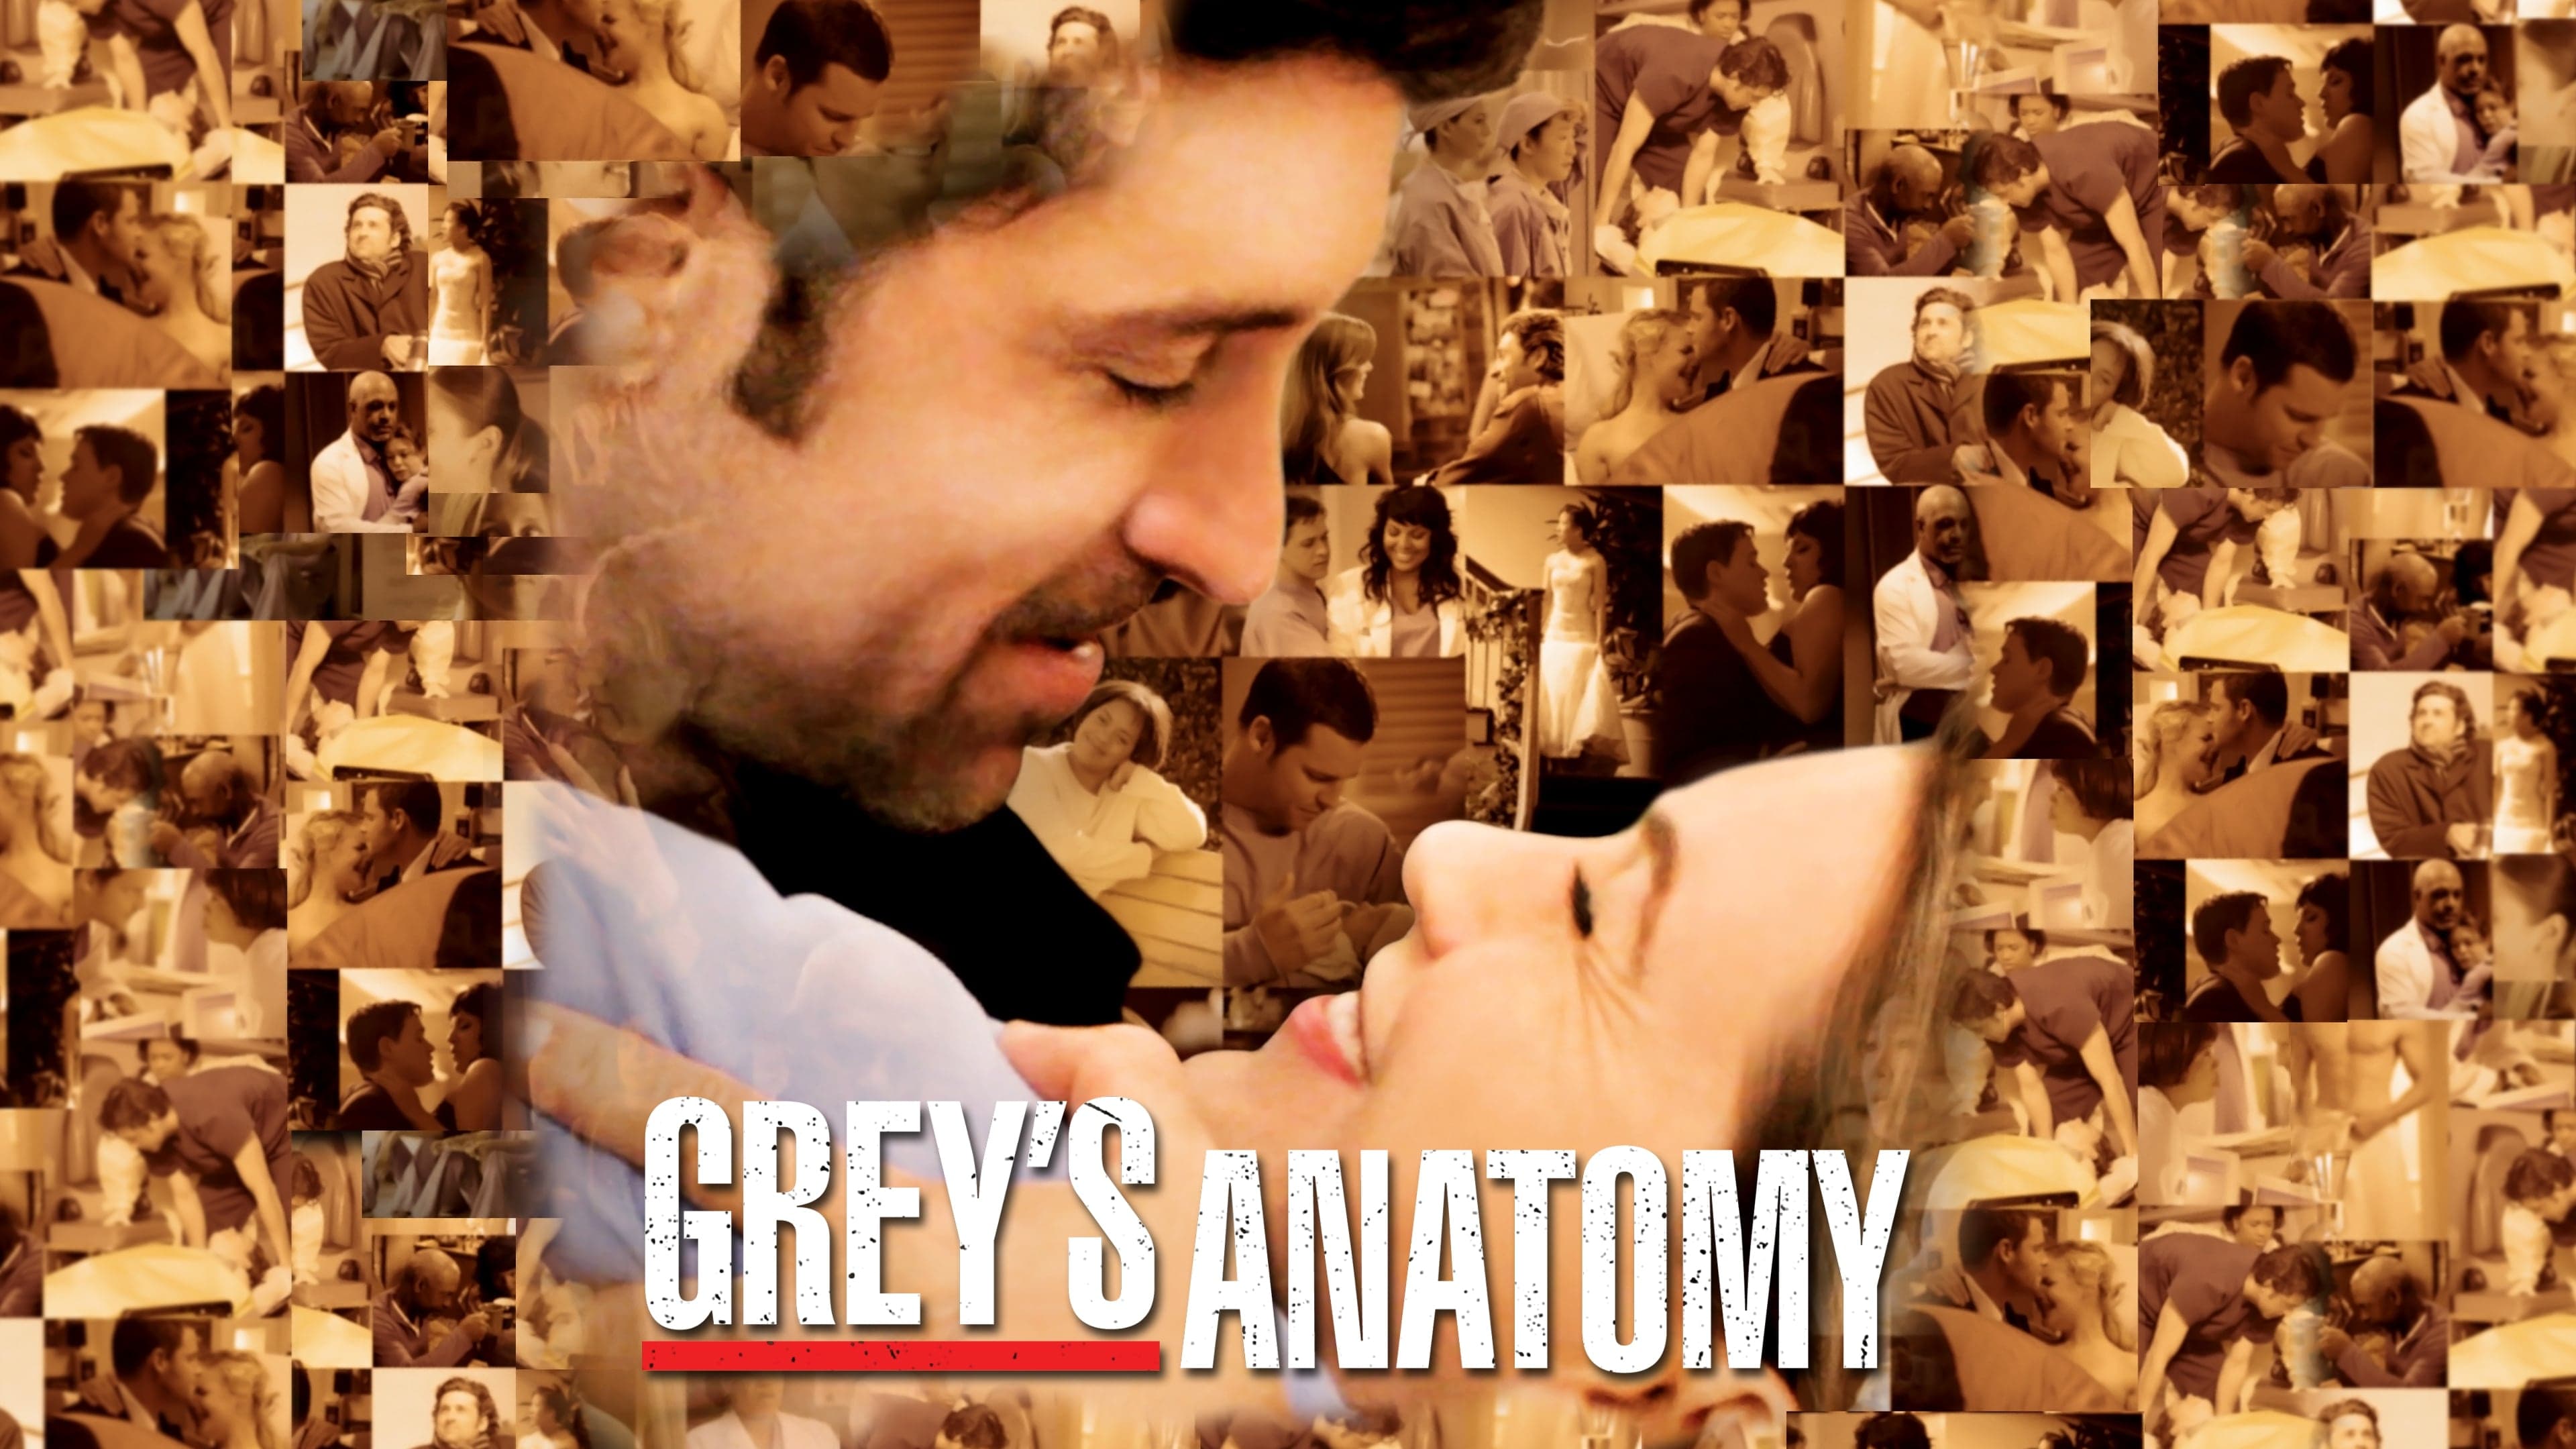 Grey's Anatomy - Season 9